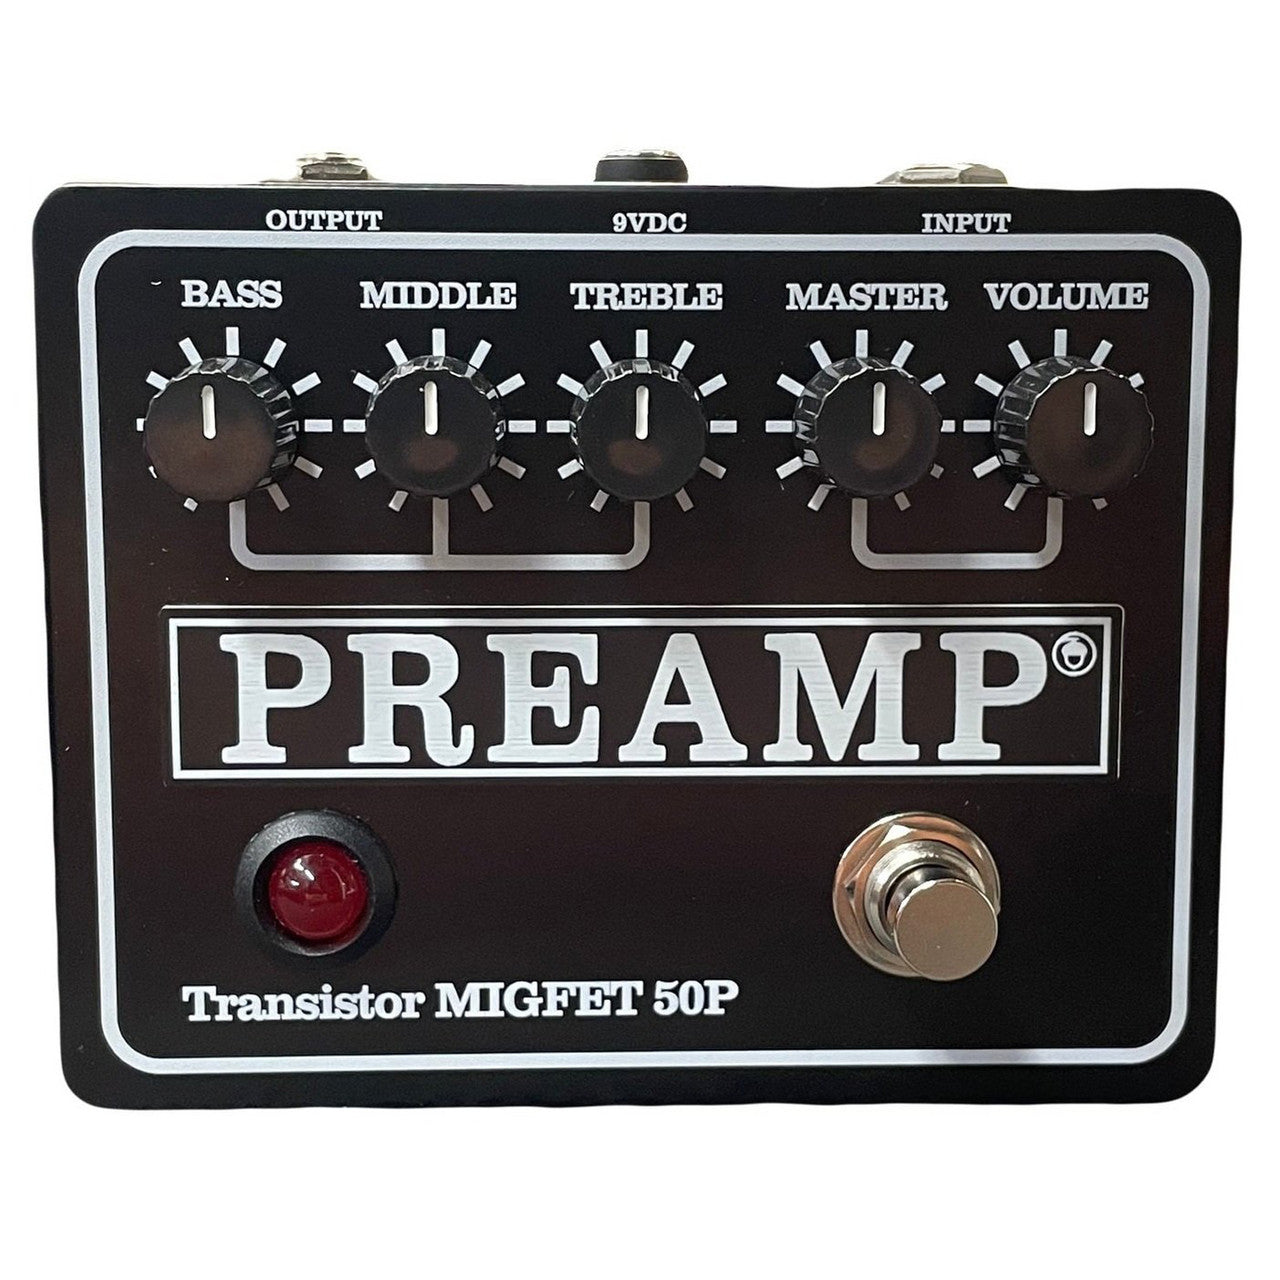 Acorn Amps “Transistor MIGFET 50P” Preamp